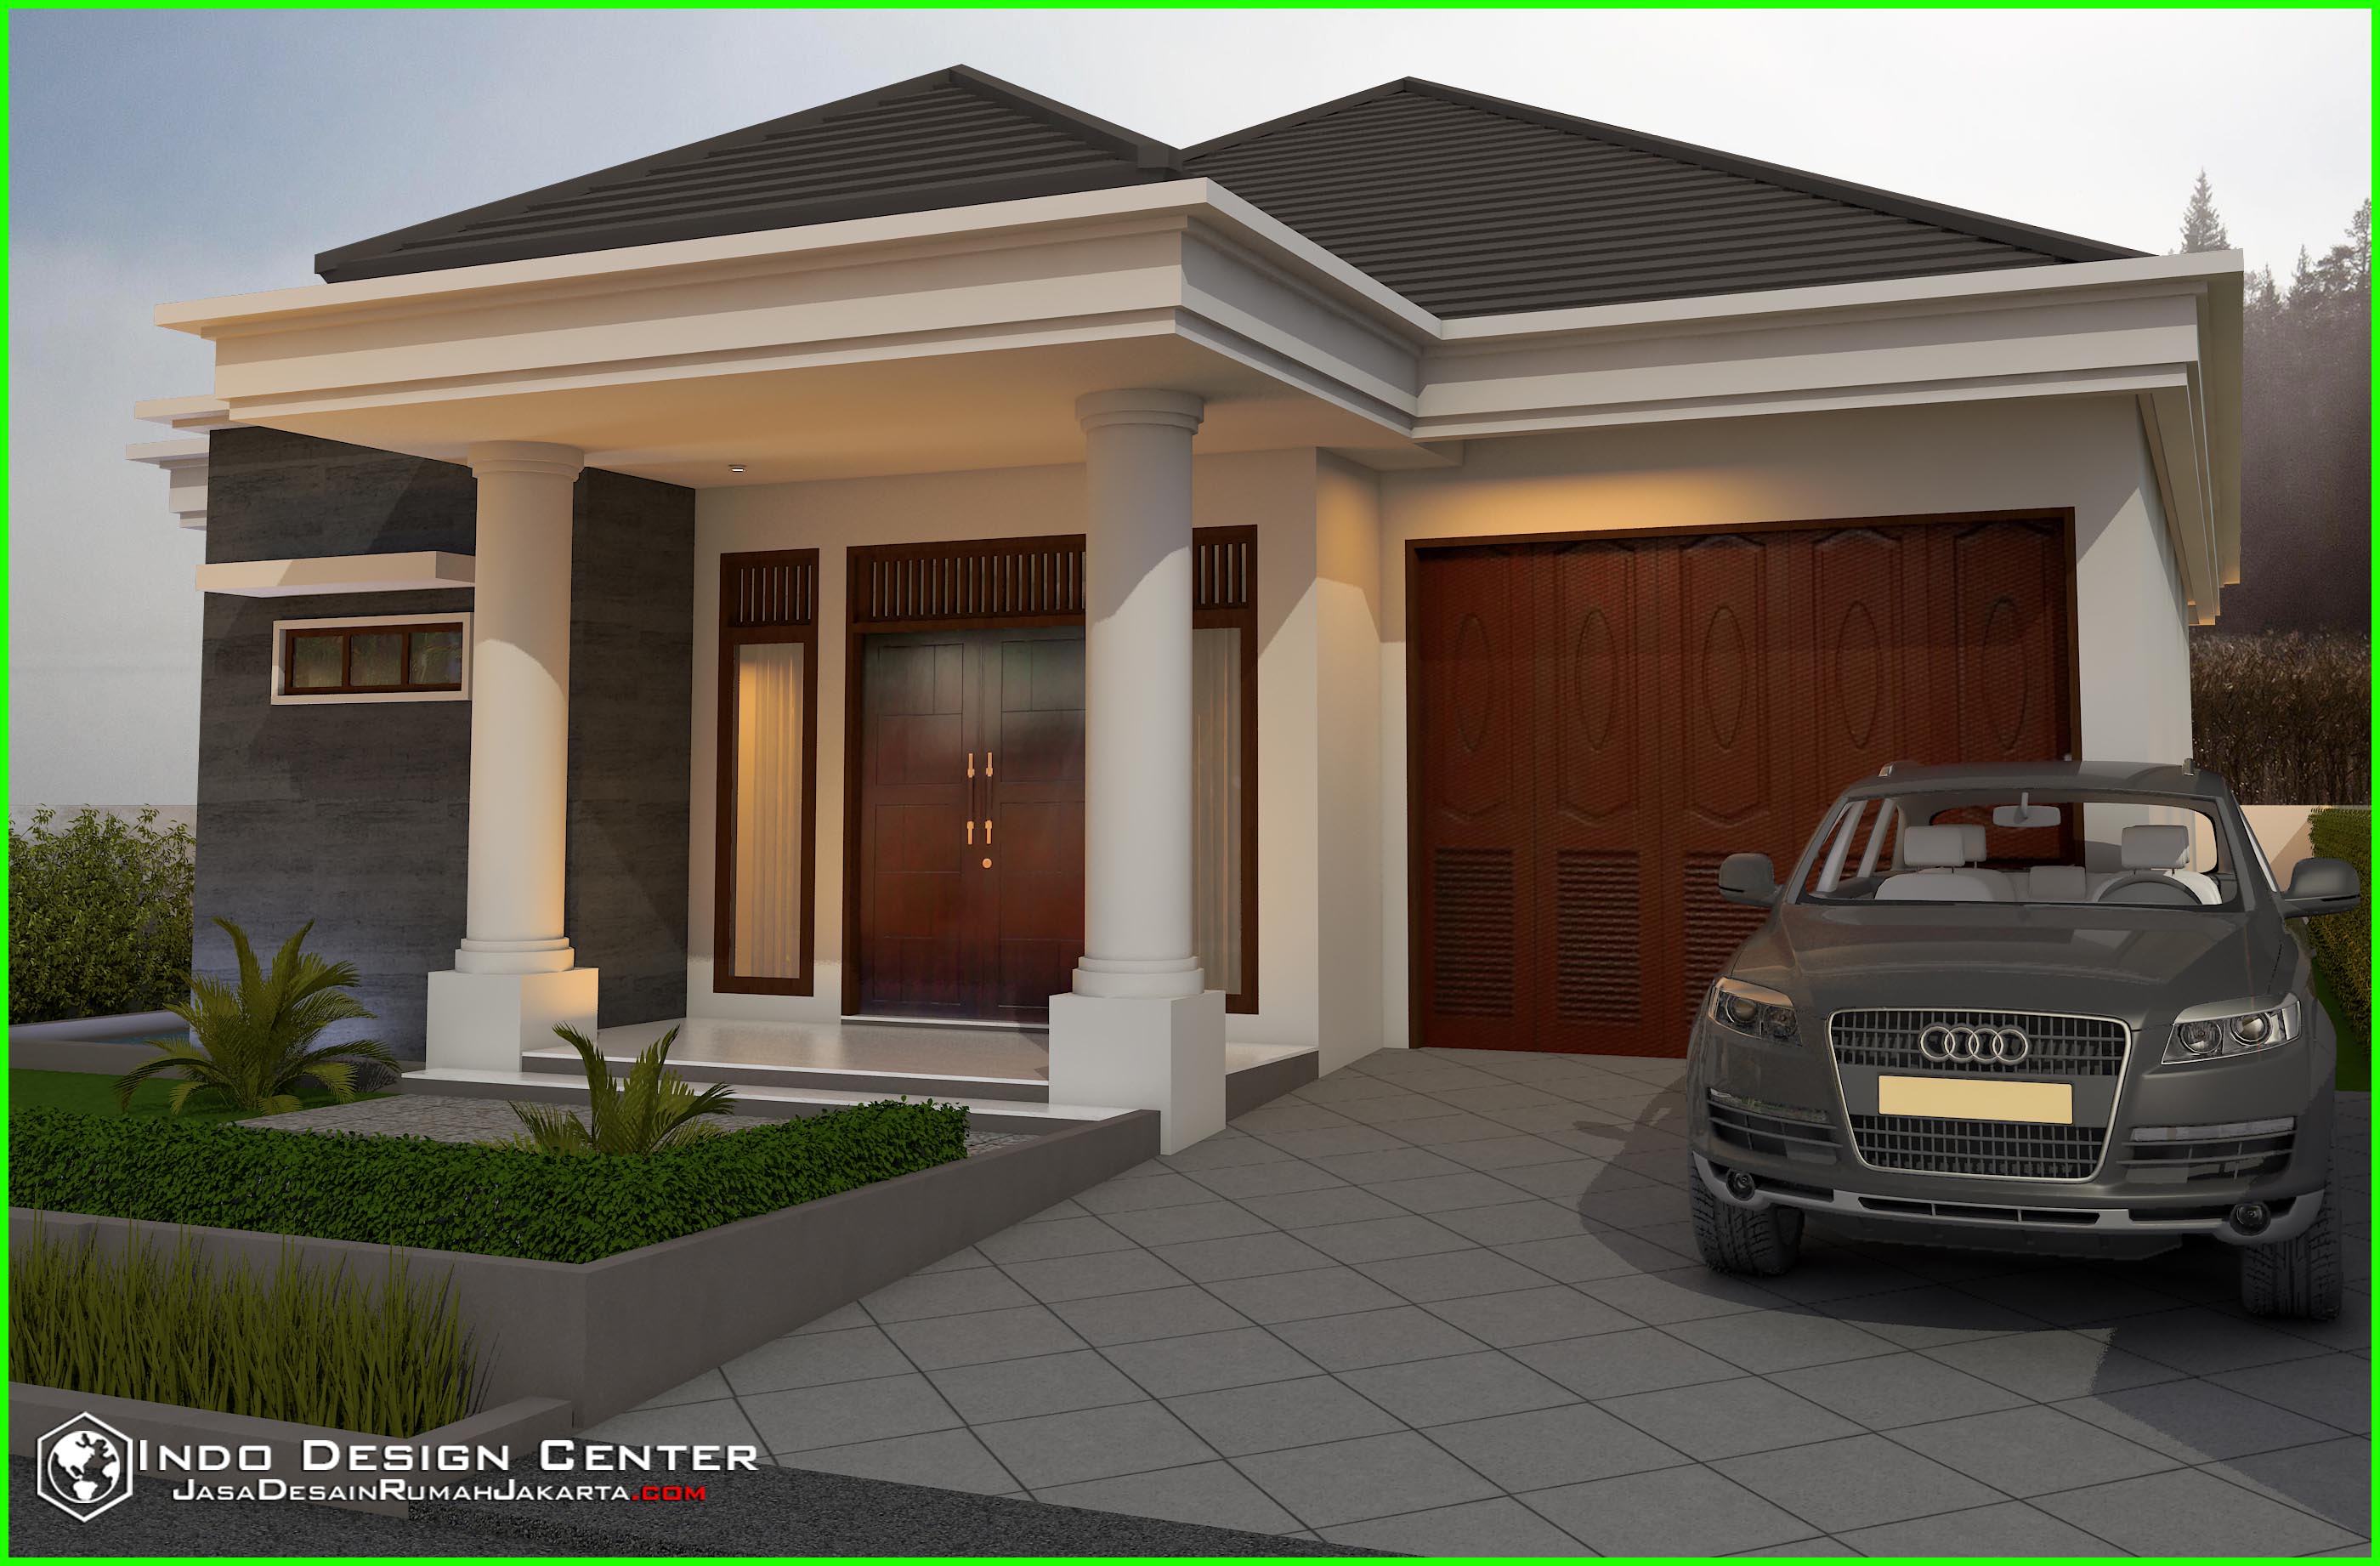 Model Model Rumah Villa Sederhana Jasa Desain Rumah Jakarta